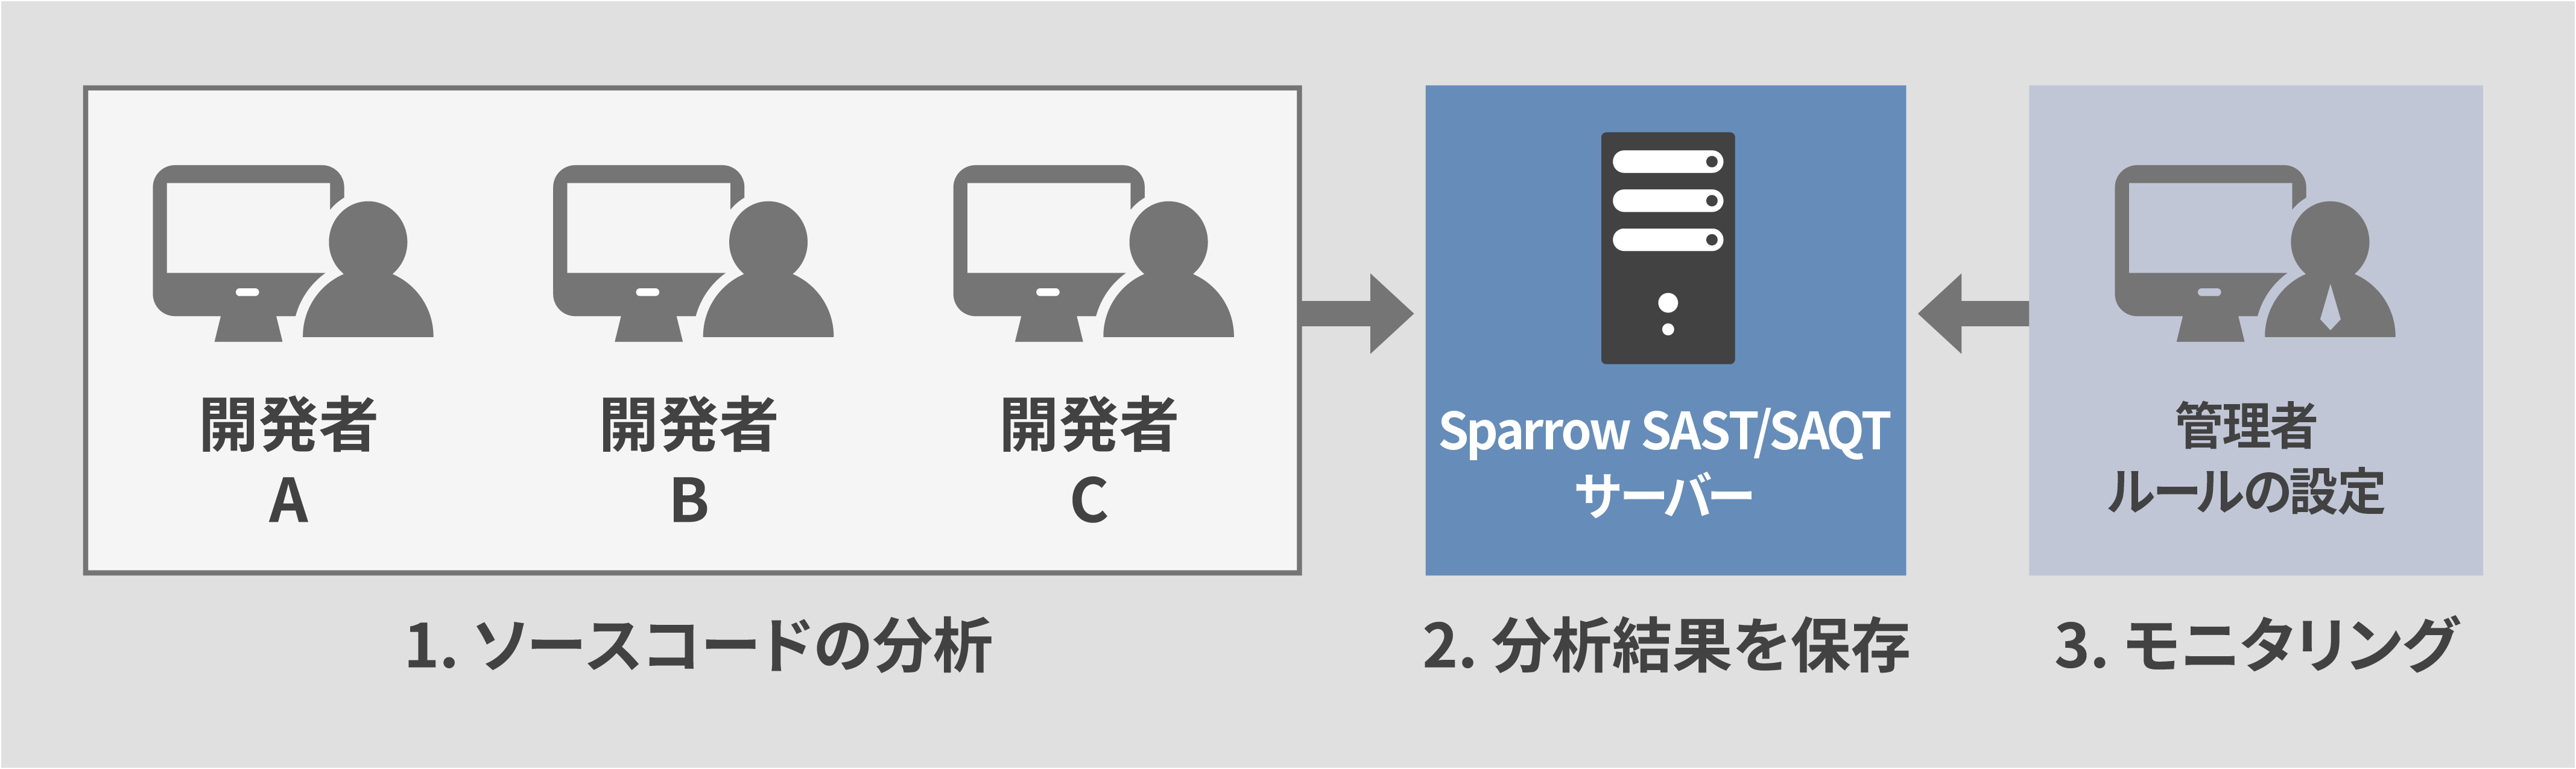 Sparrow SAST/SAQT利用イメージ